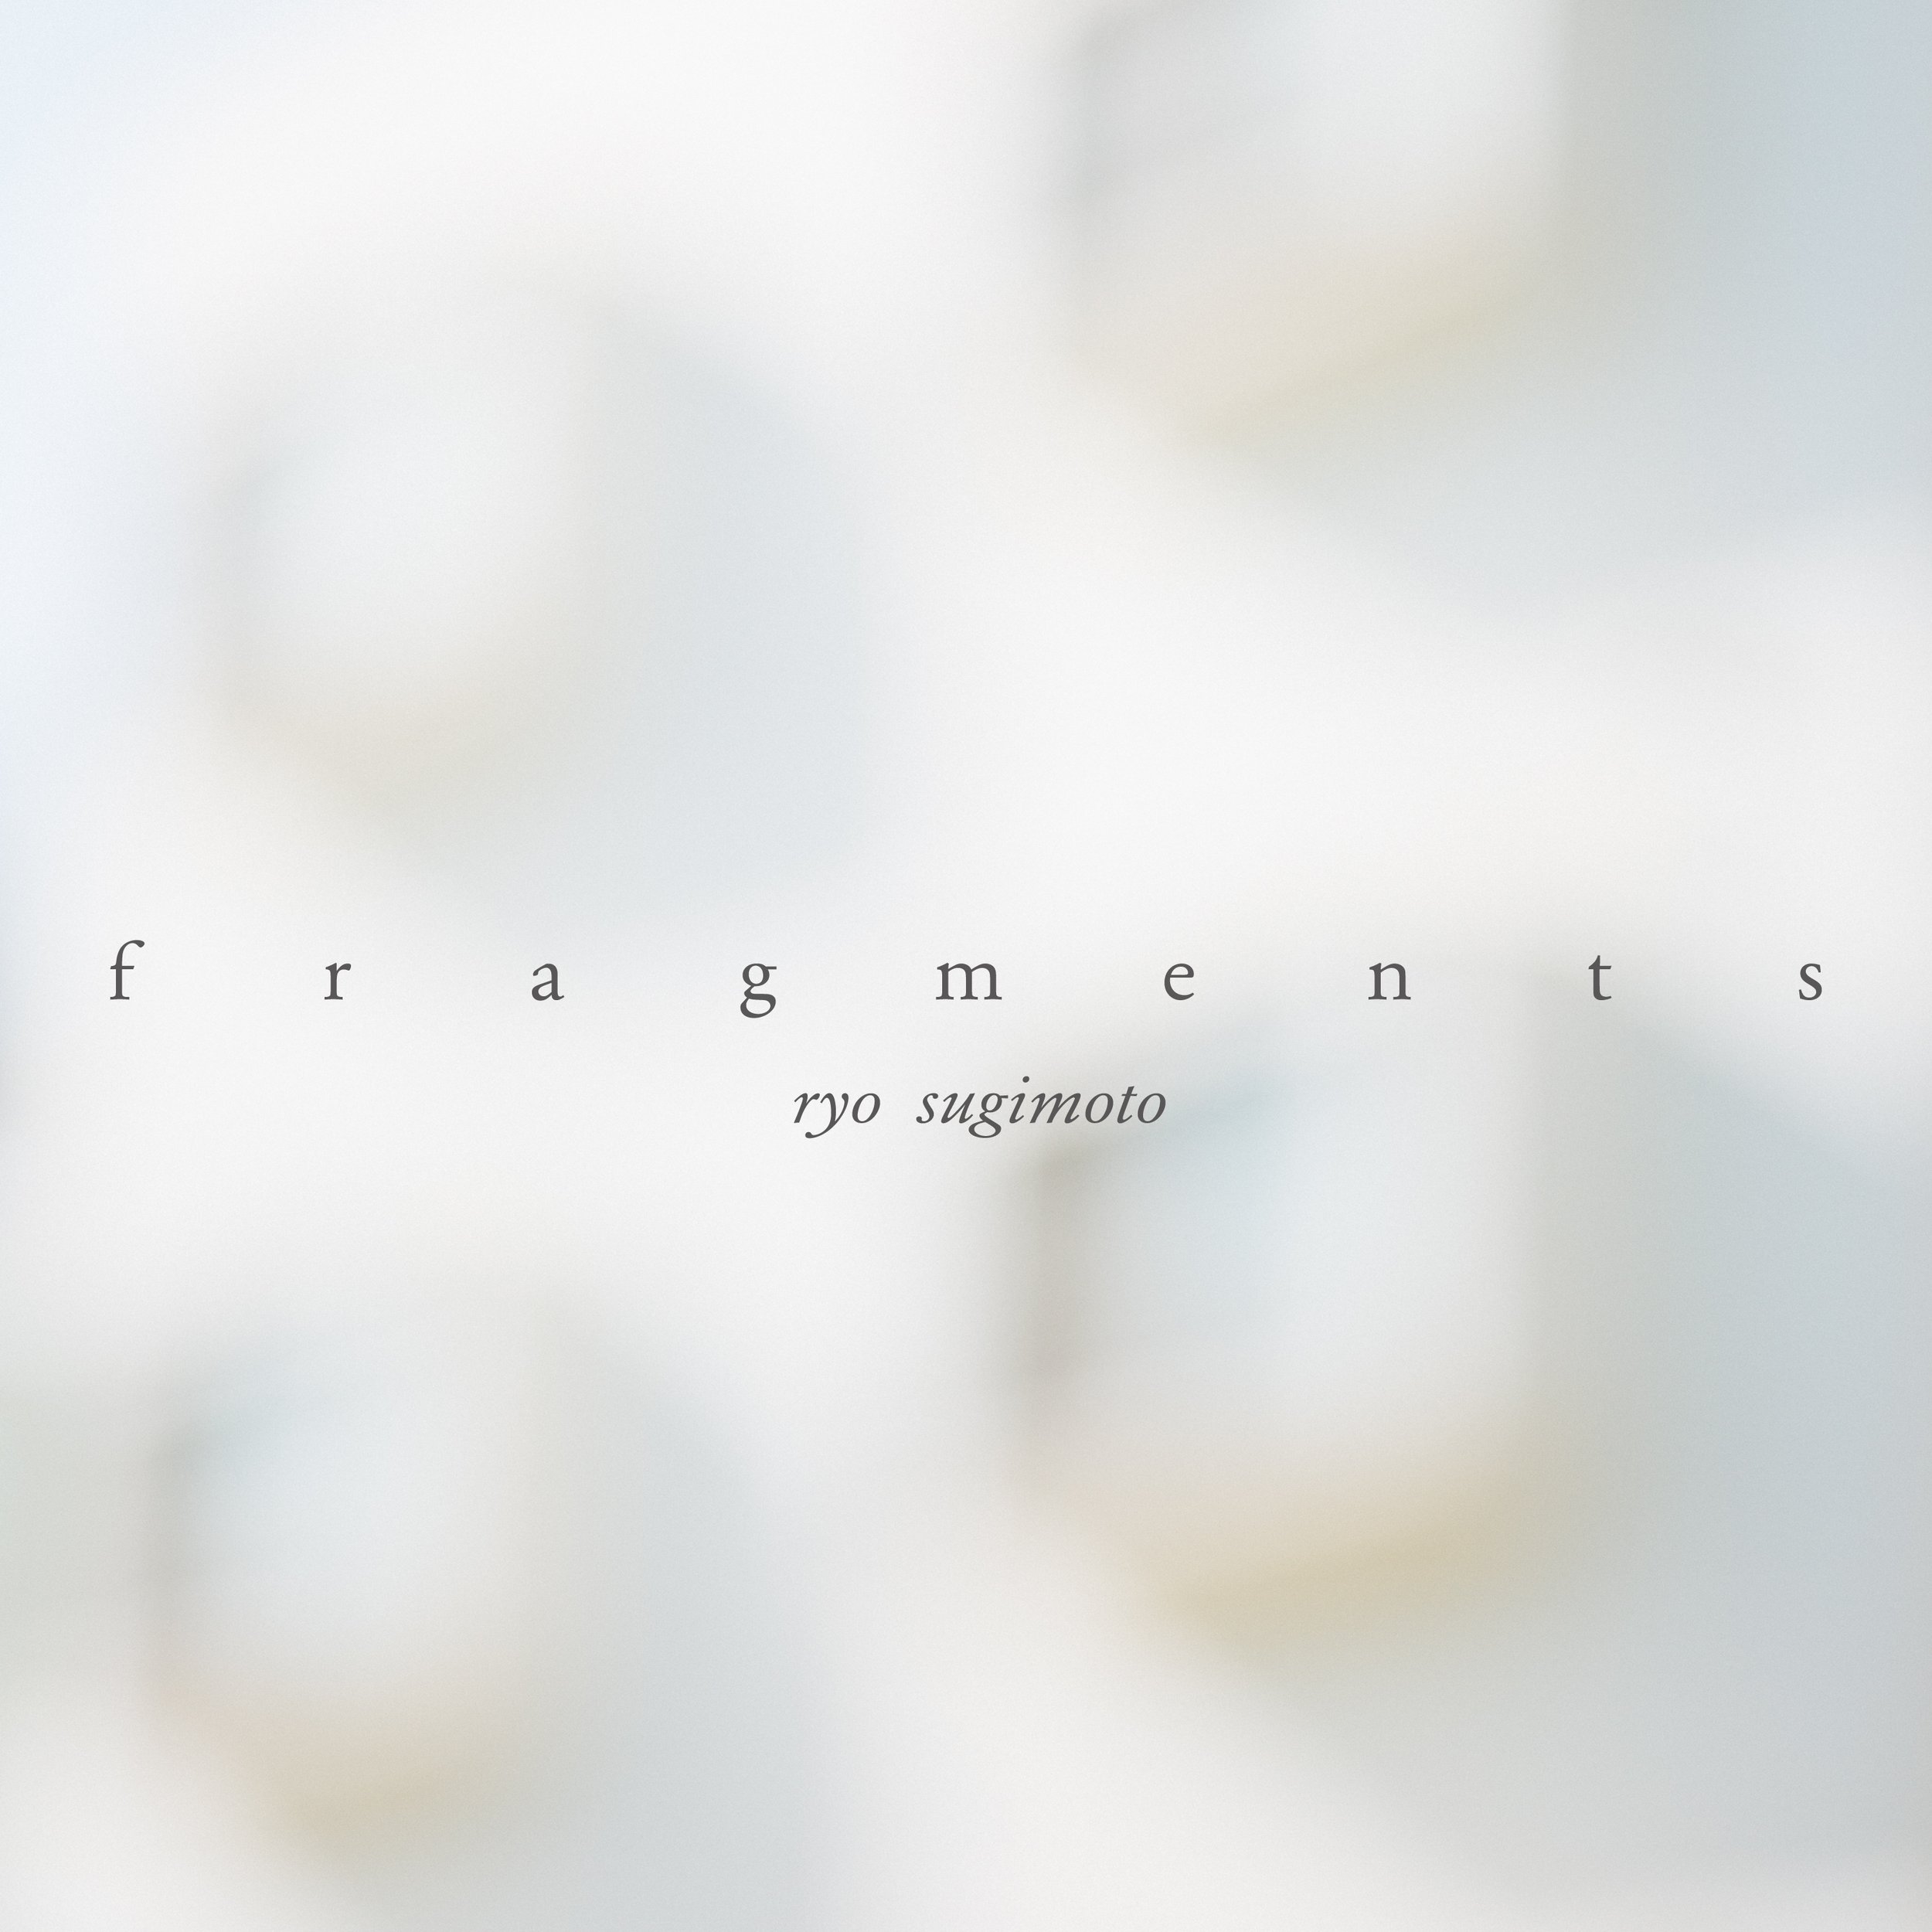 ryo sugimoto / Fragments